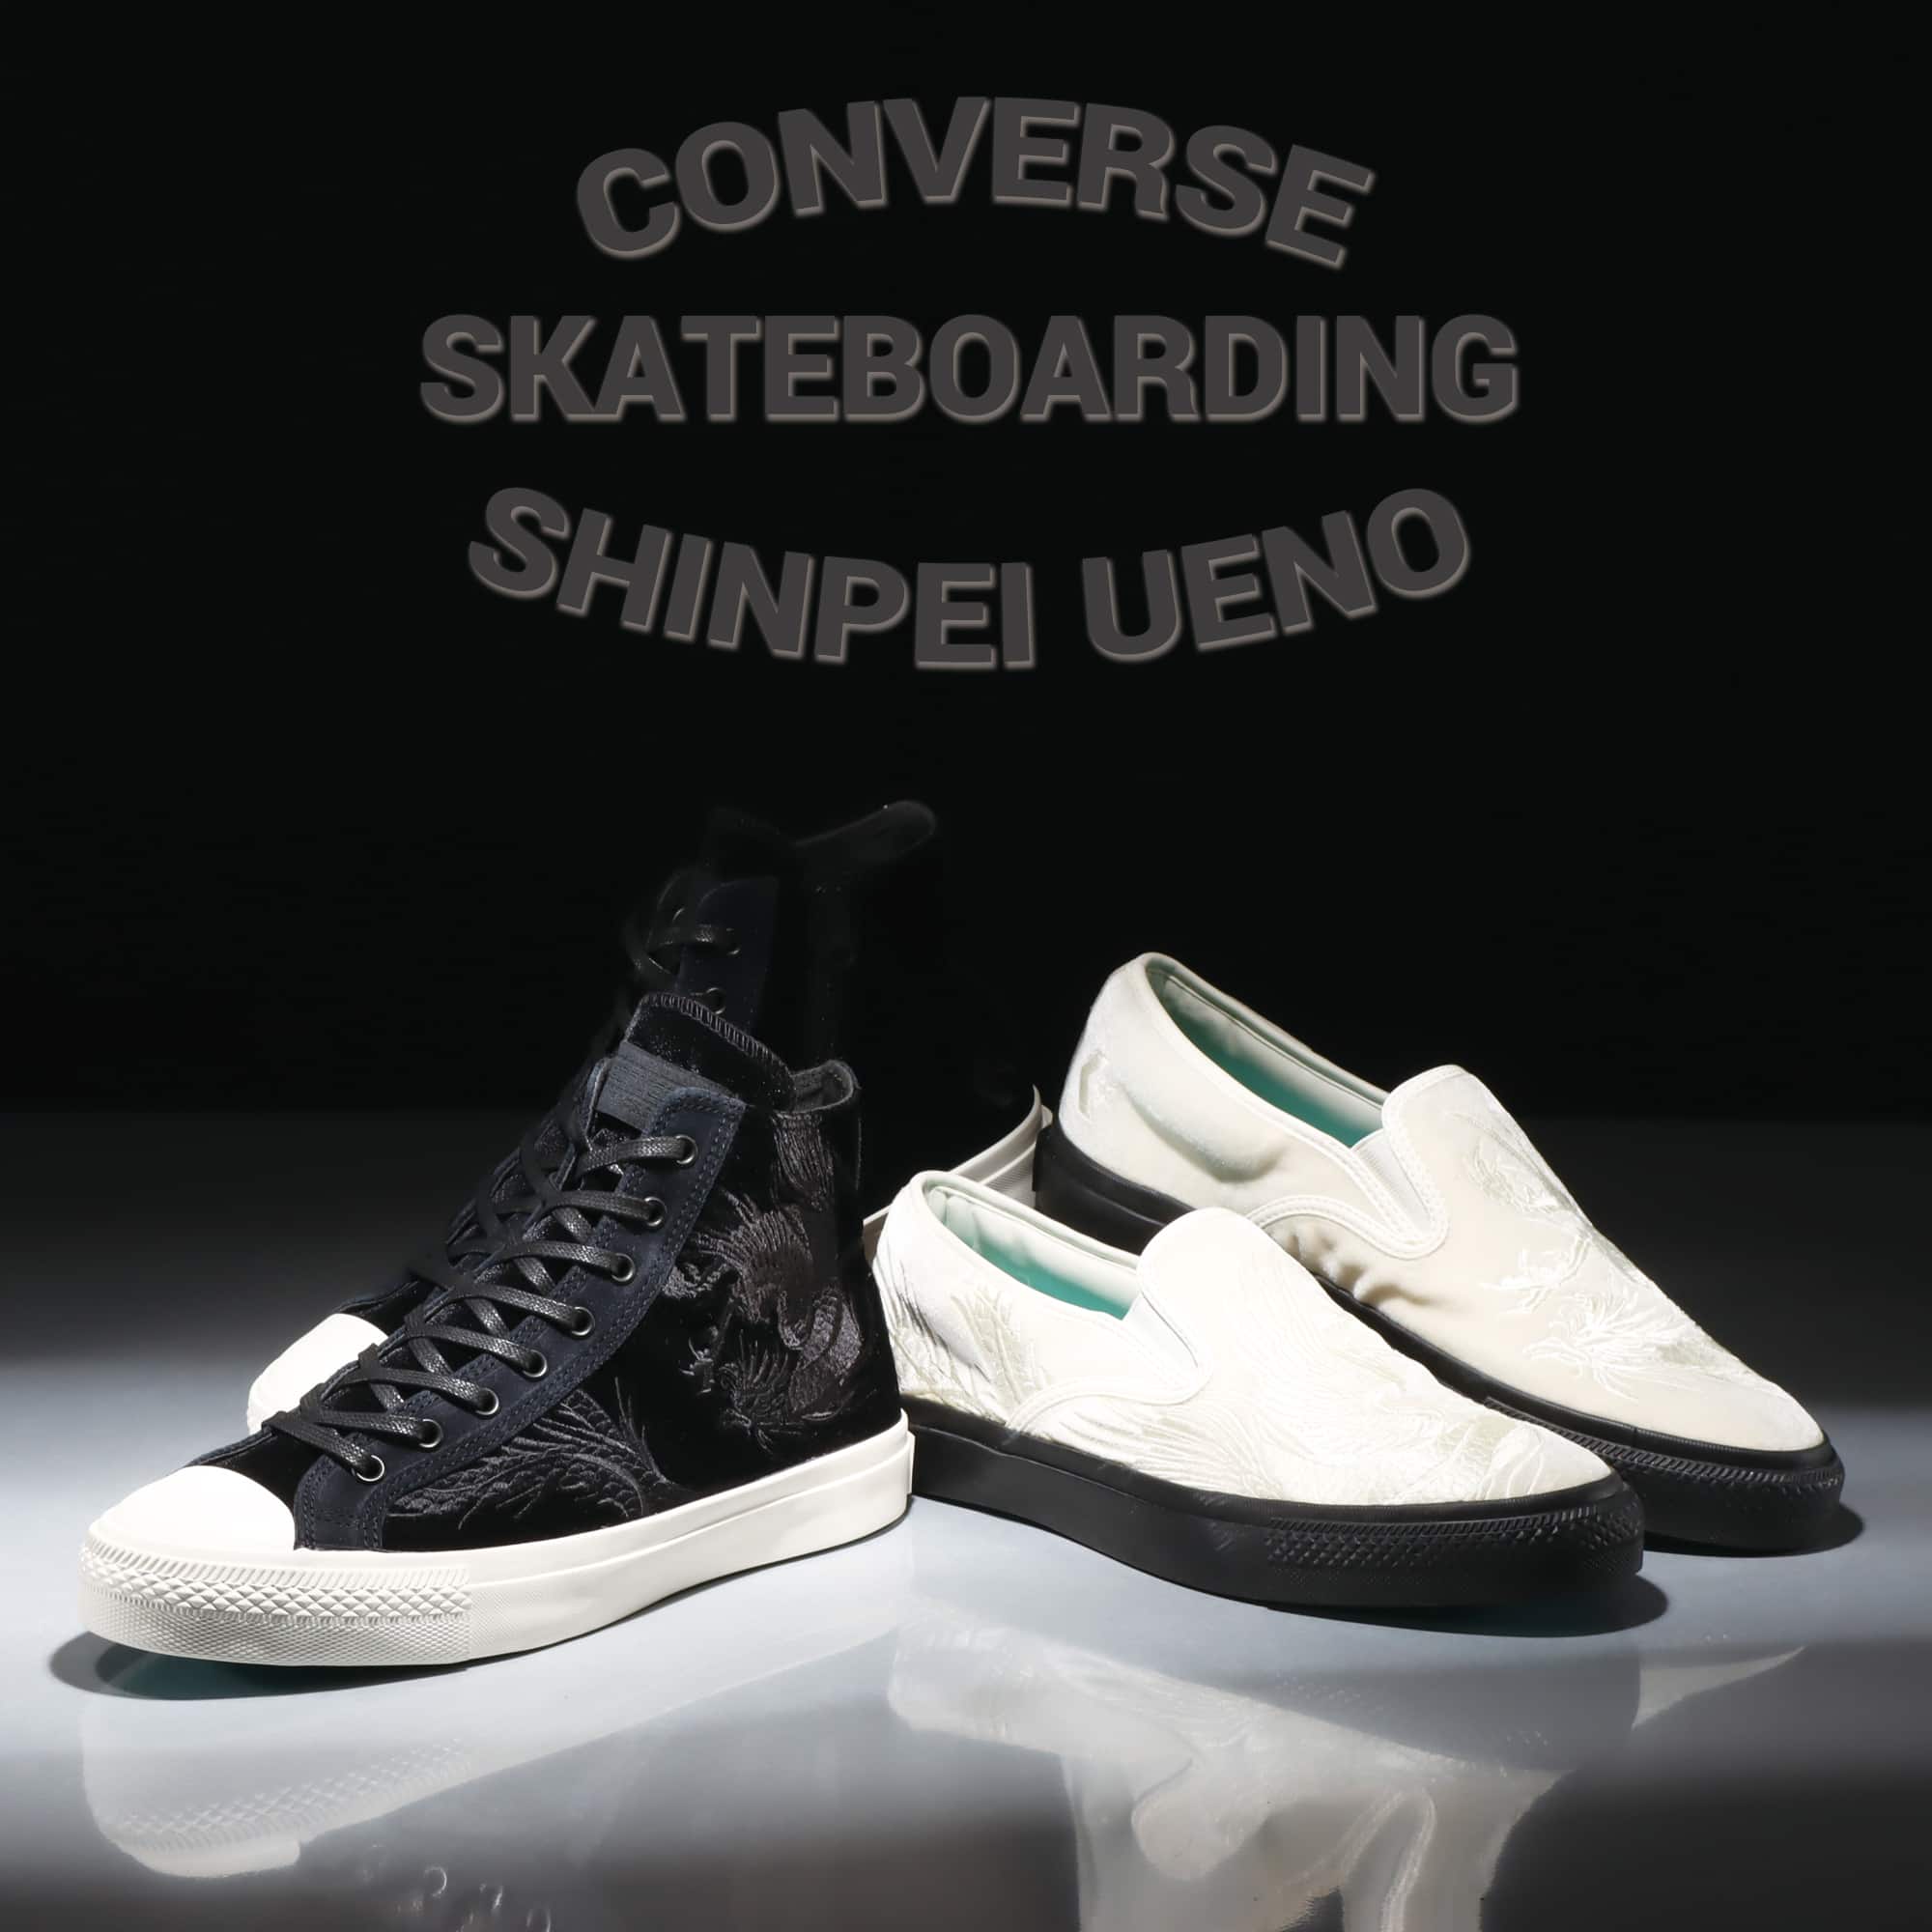 CONVERSE SKATEBORDING SHINPEI UENO